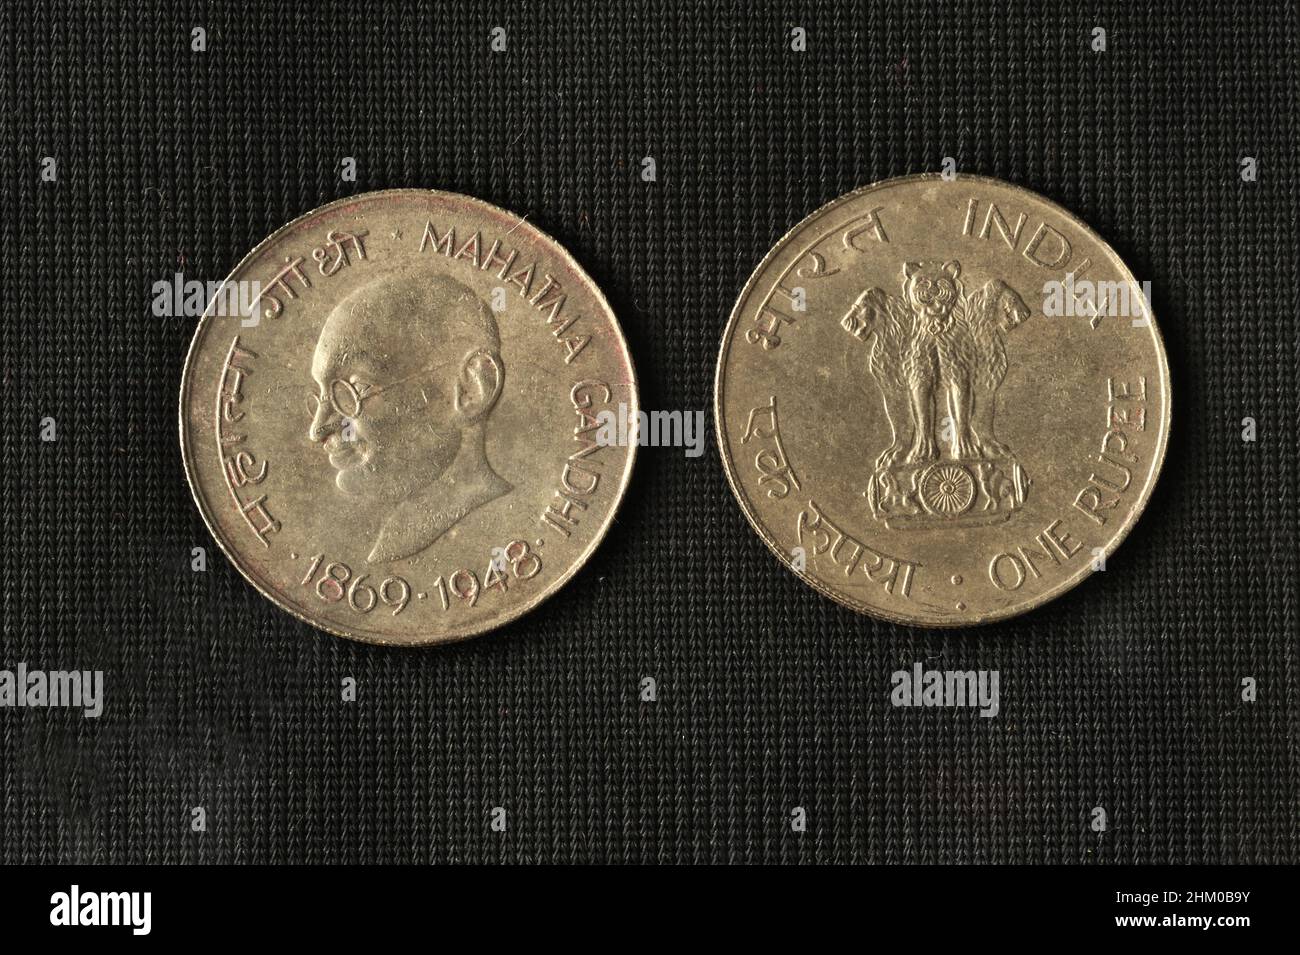 Mumbai India March 22 2021 Reserve bank of india face of Mhatma Gandhi ...